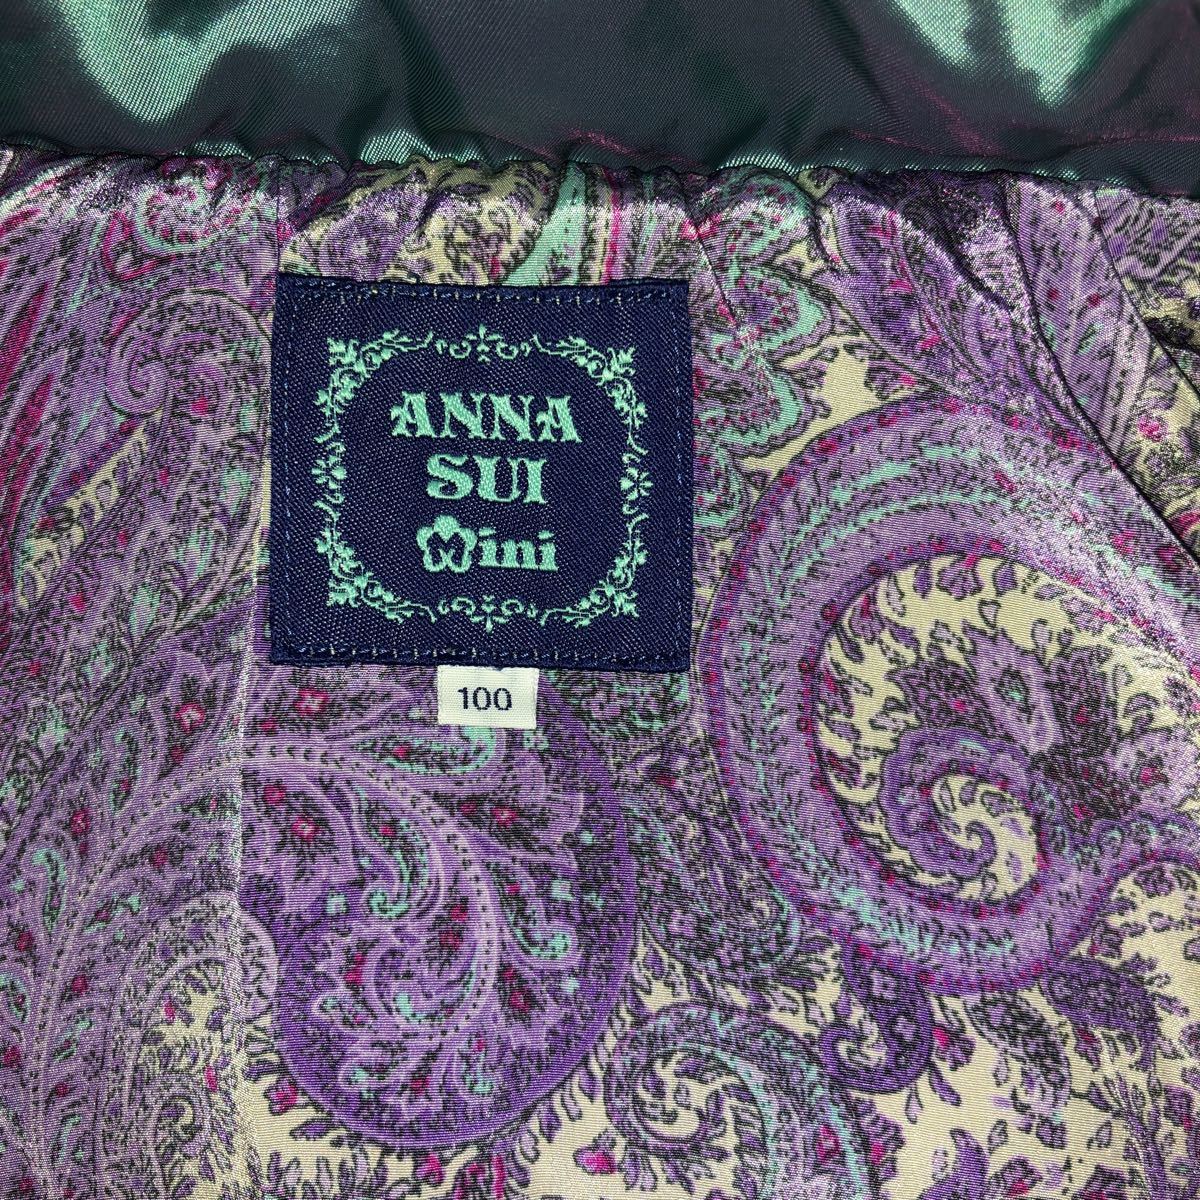 [ANNA SUI mini| Anna Sui Mini ] пуховик верхняя одежда жакет защищающий от холода 100. б/у изумруд зеленый 